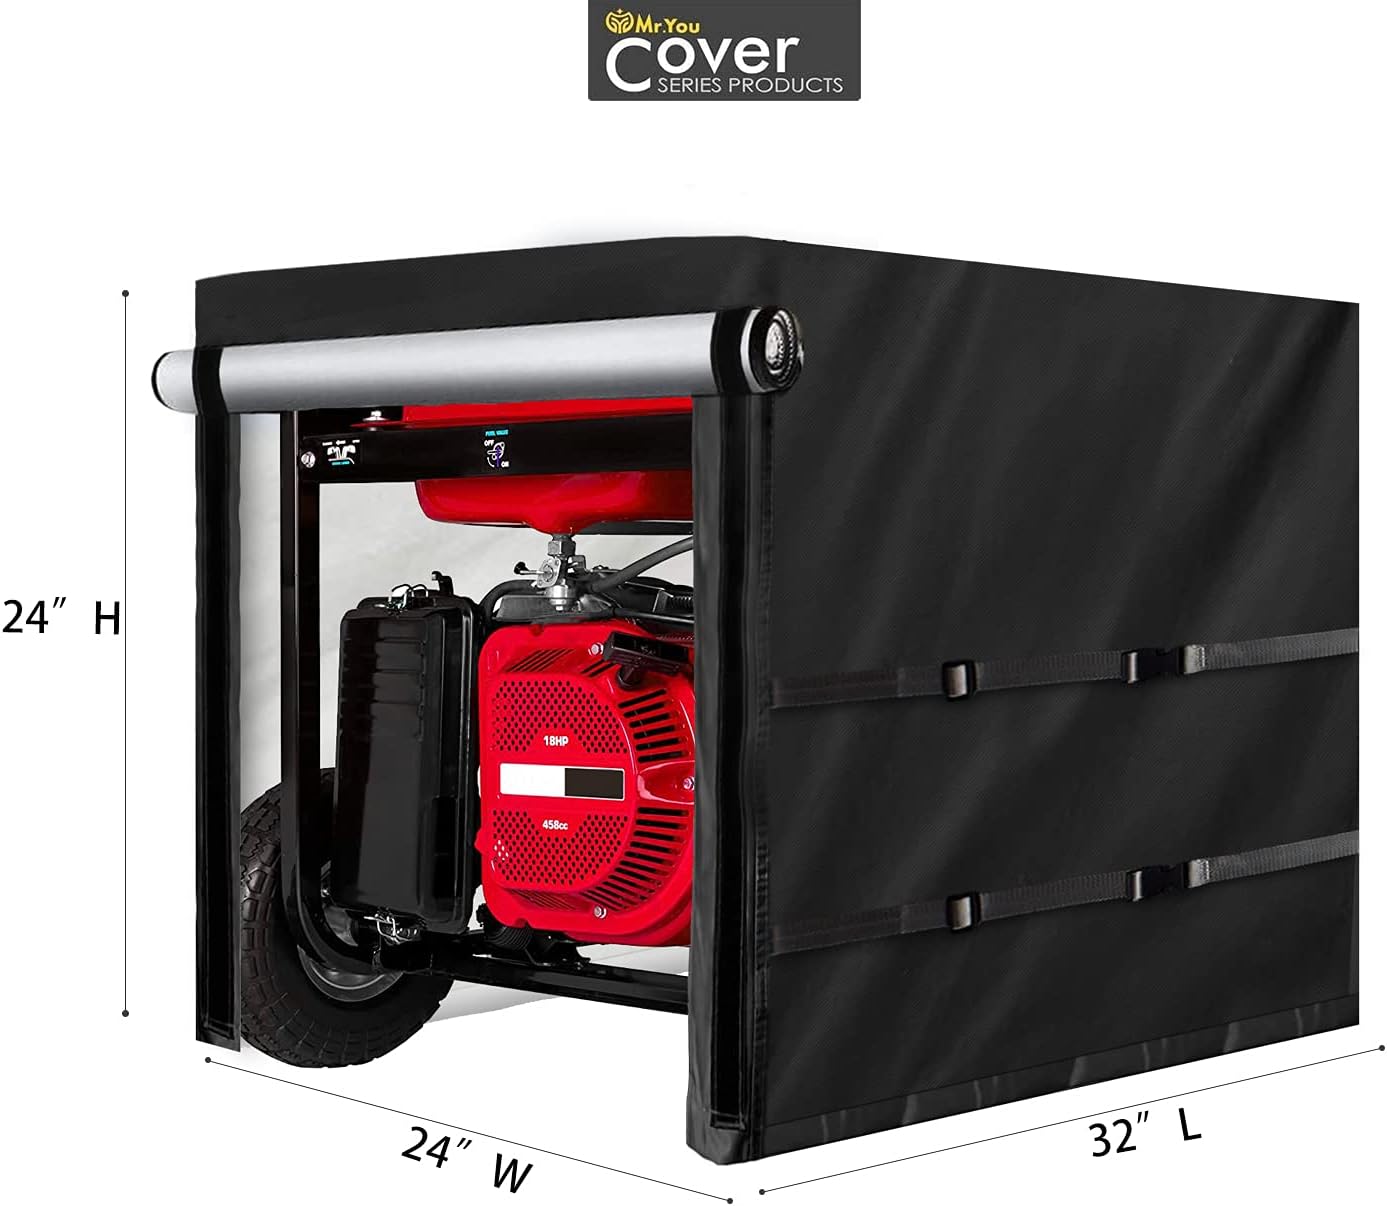 Mr.You Generator Cover Universal Generator Cover fit for Most Generators 5500-15000 Watt Heavy Duty Resistant Storage Cover (Gray) - Mr.You Generator Cover Review